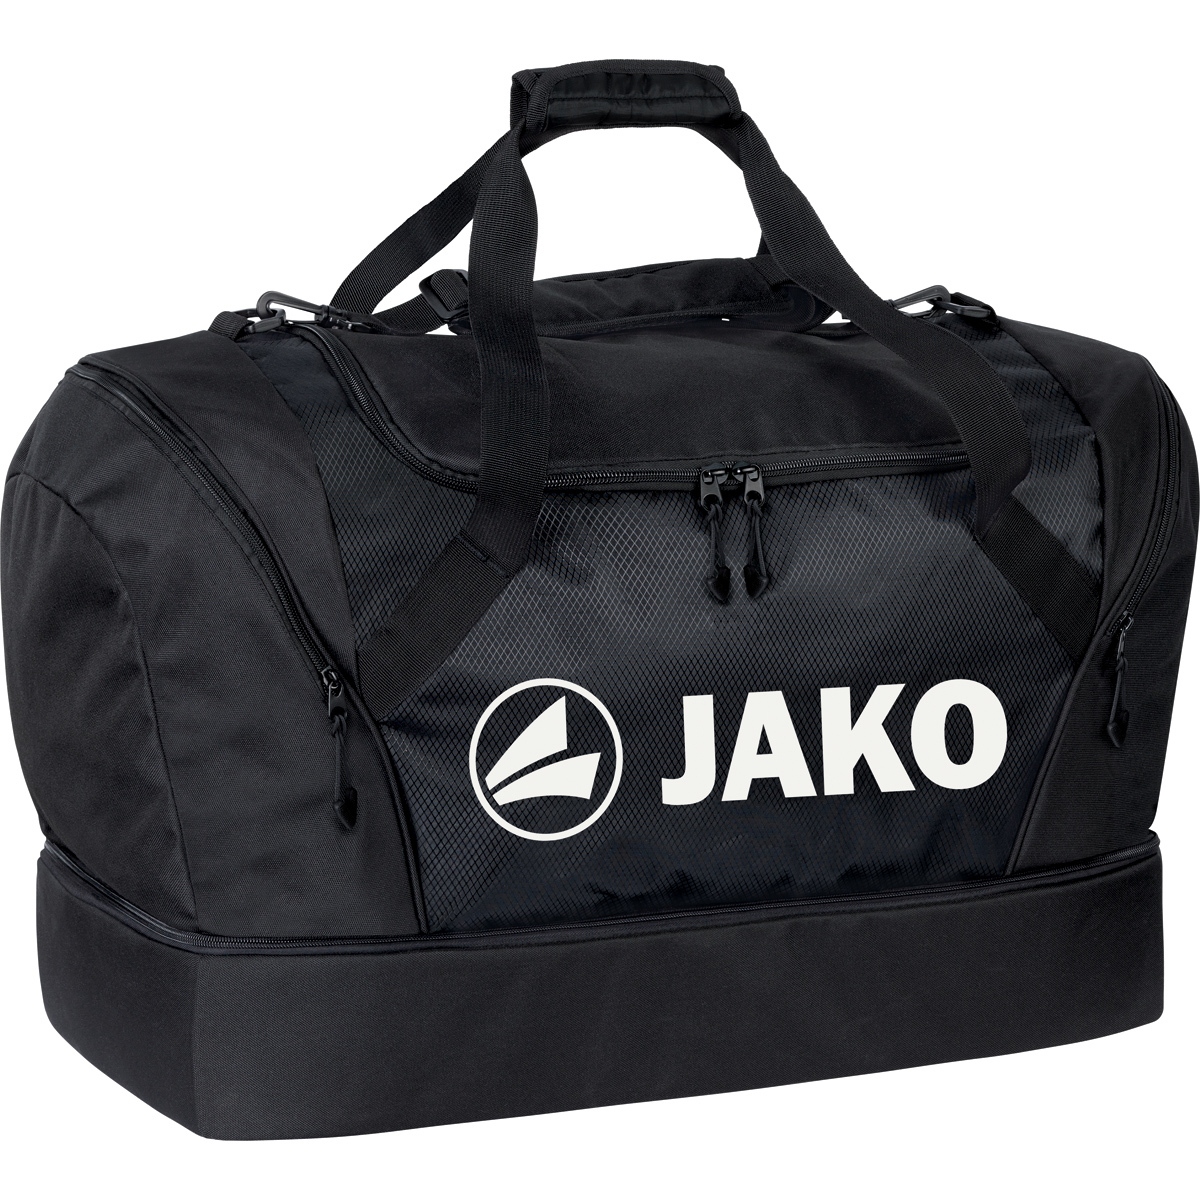 JAKO Sporttasche "JAKO" - schwarz - Größe L